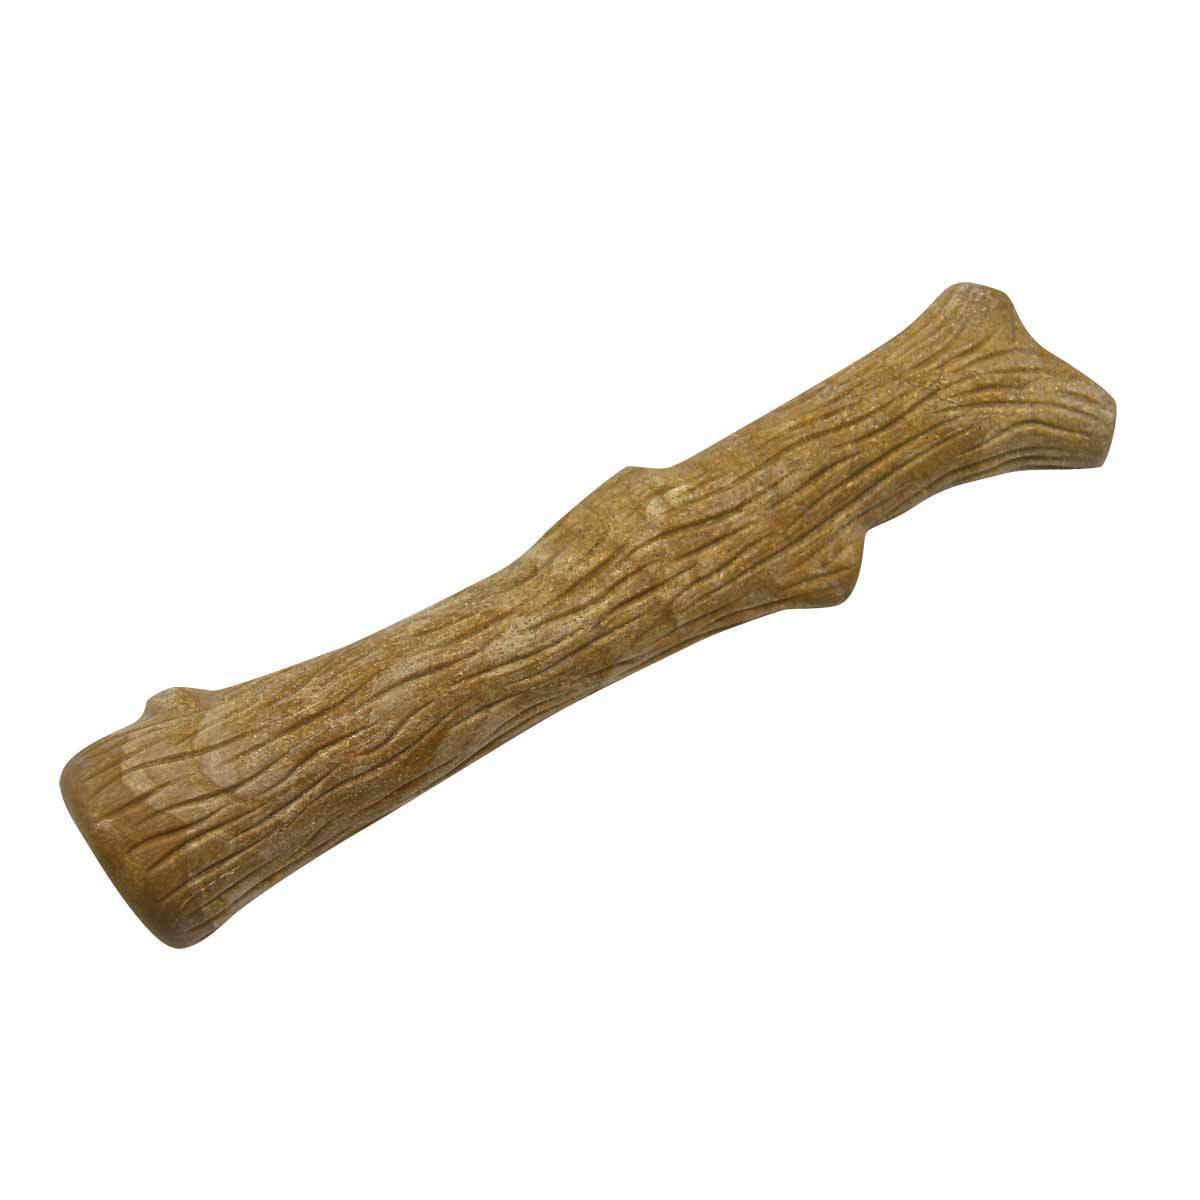 Petstages Dogwood Stick Dog Toy Medium (Brown)